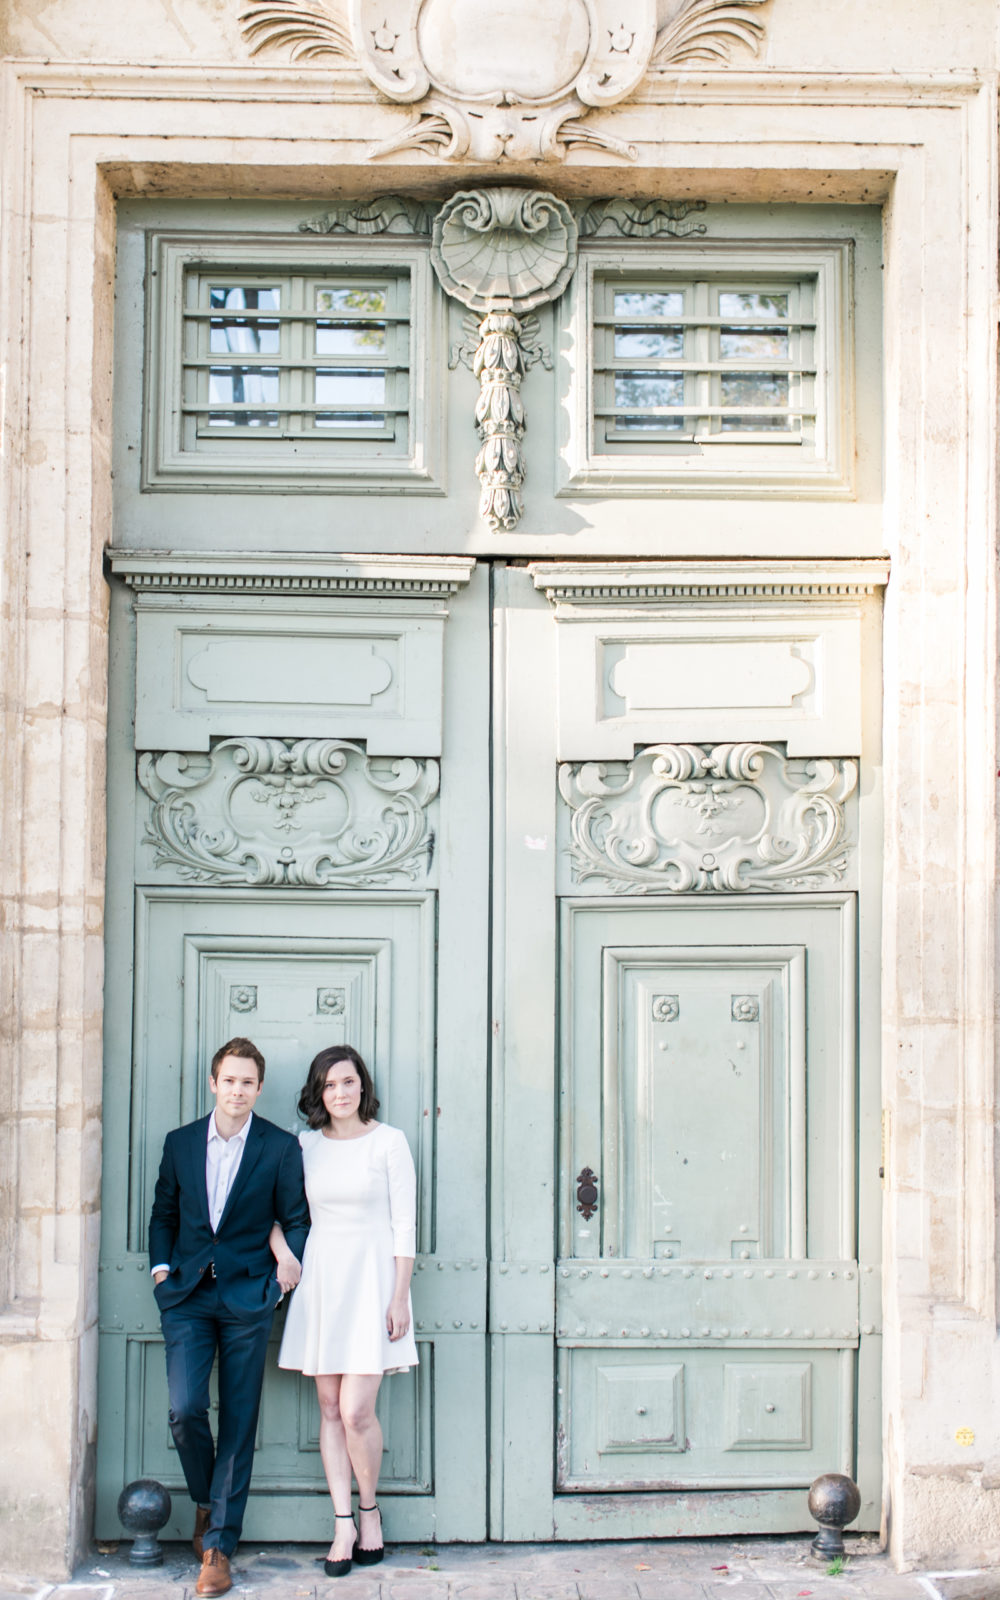 Best Engagement Photos of 2018 | Fine Art Film Photography | Destination Wedding Photographer | Molly Carr Photography | Engagement Session | Pre-Wedding Photos | Chic Paris Engagement Session | France